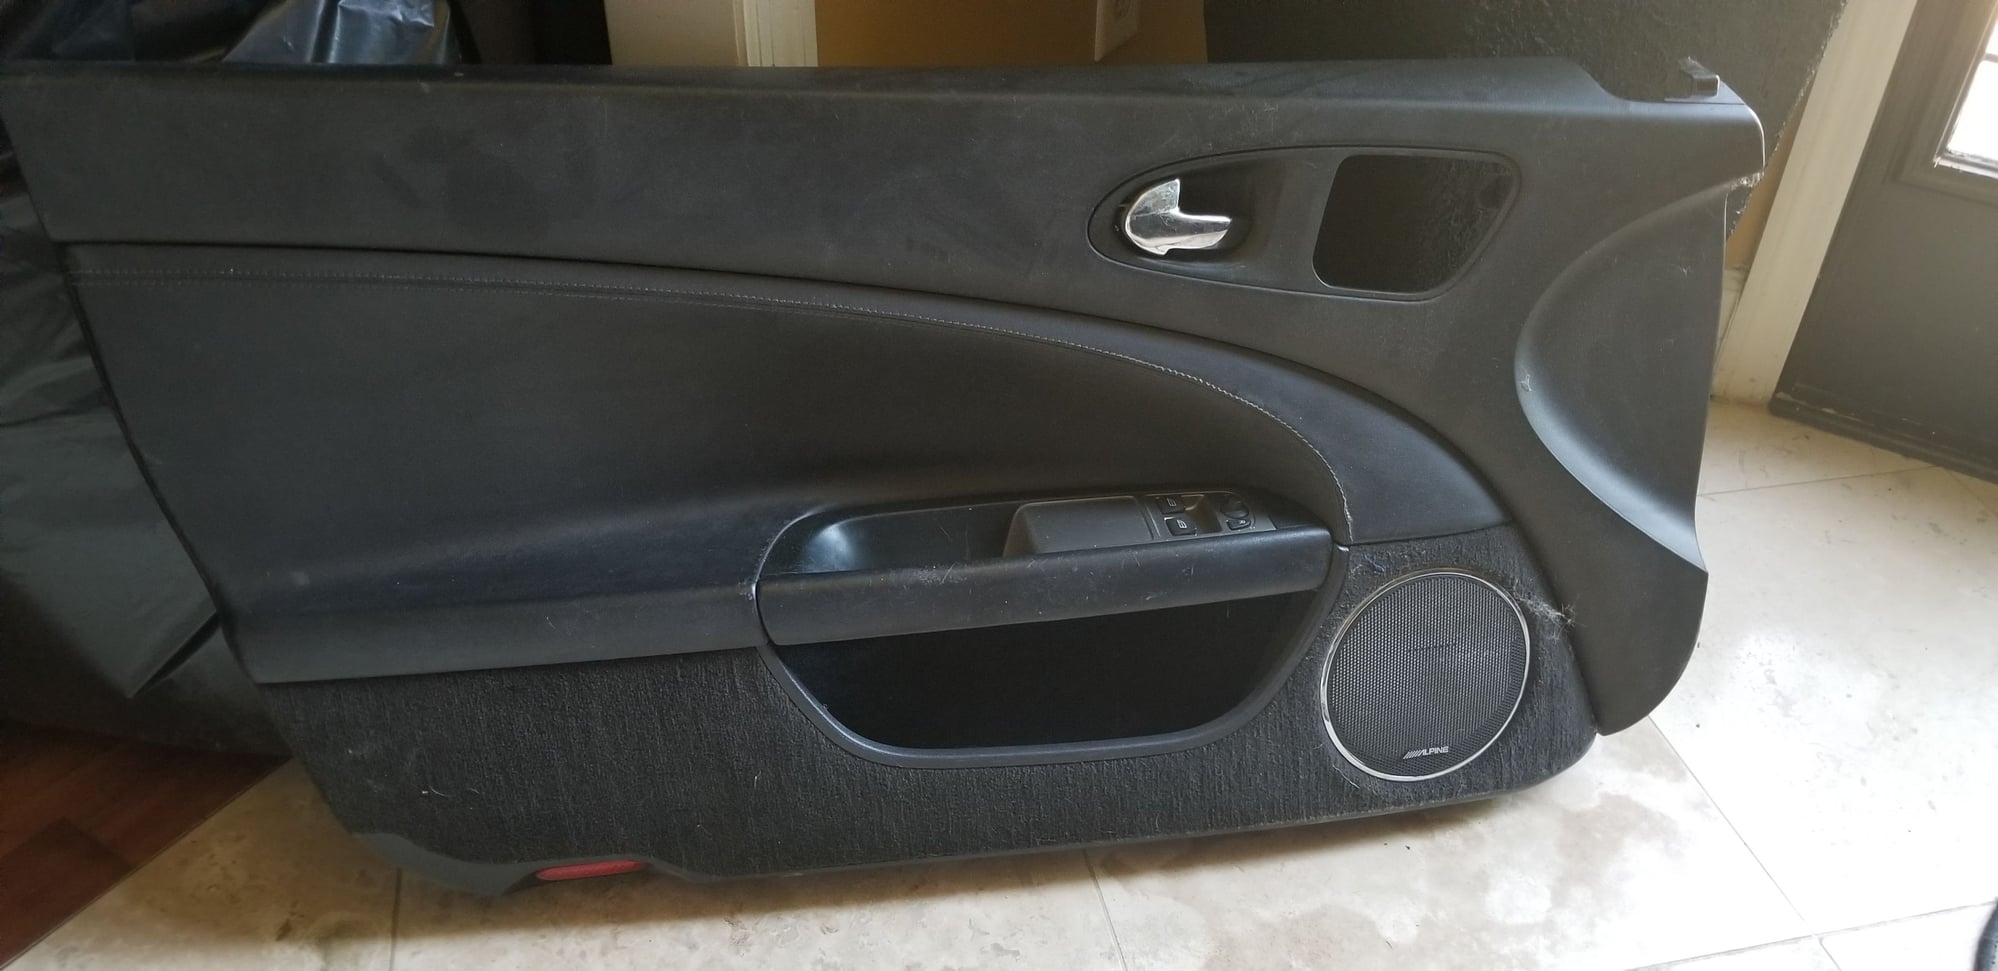 Interior/Upholstery - Door interior leather black Driver left side - Used - 2006 to 2014 Jaguar XK - Johns Creek, GA 30022, United States